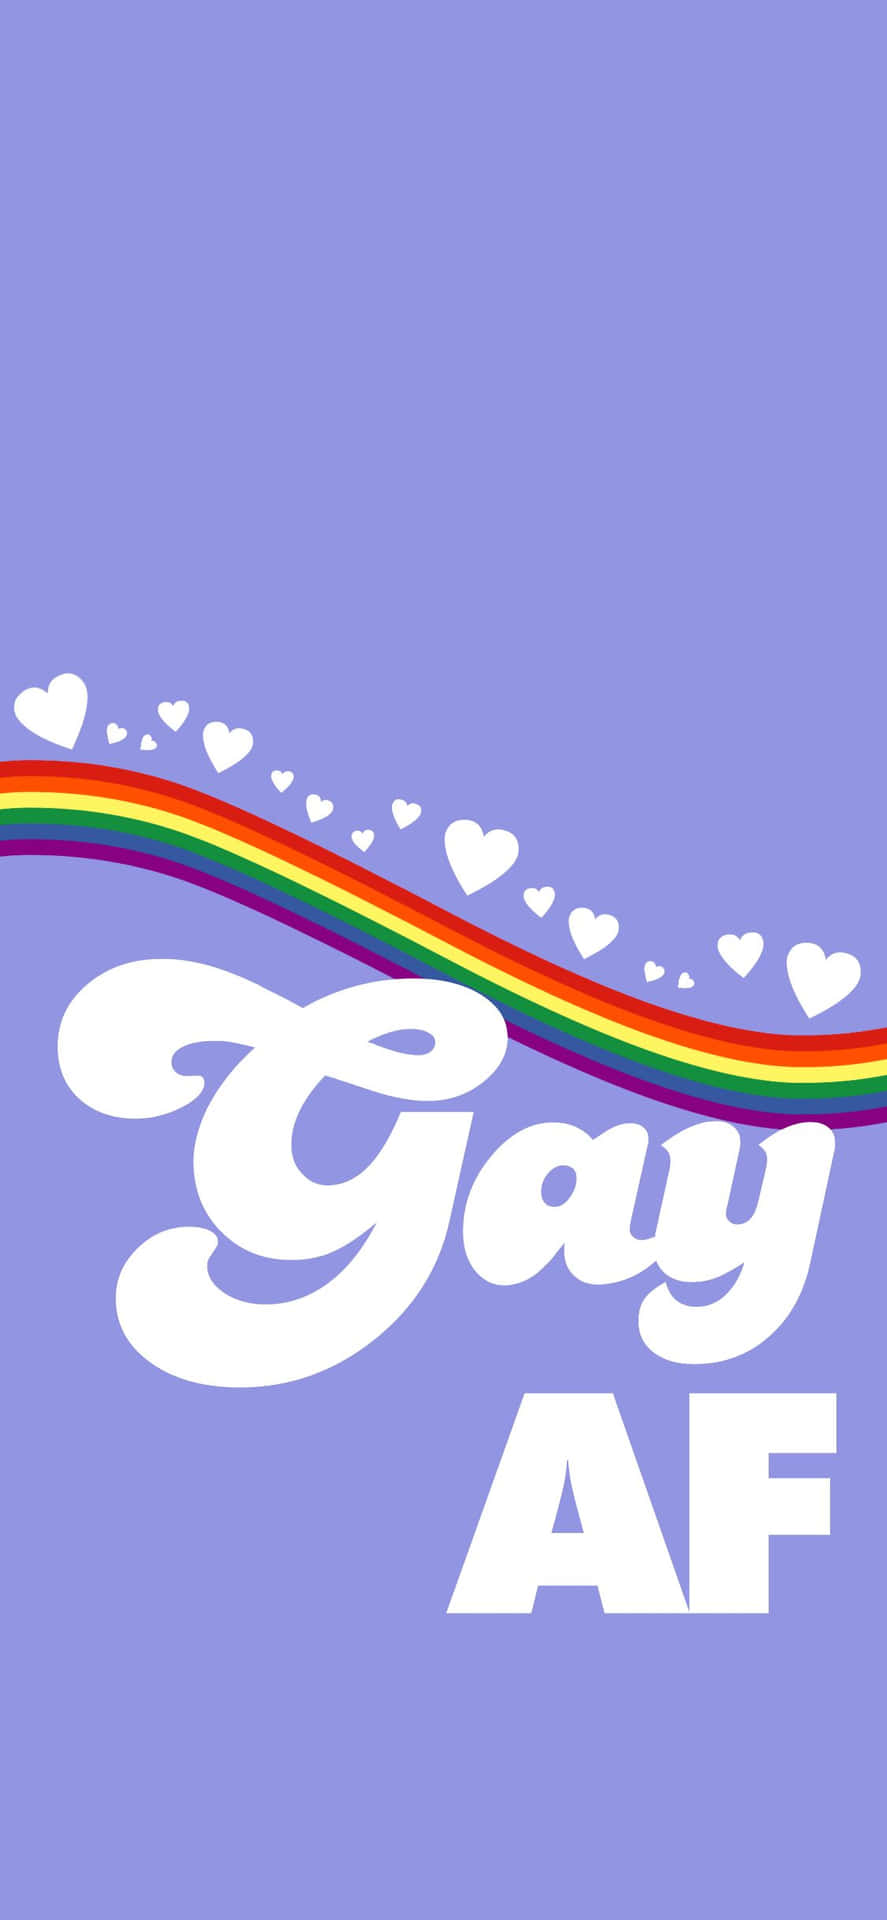 Purple Aesthetic LGBT iPhone Wallpaper